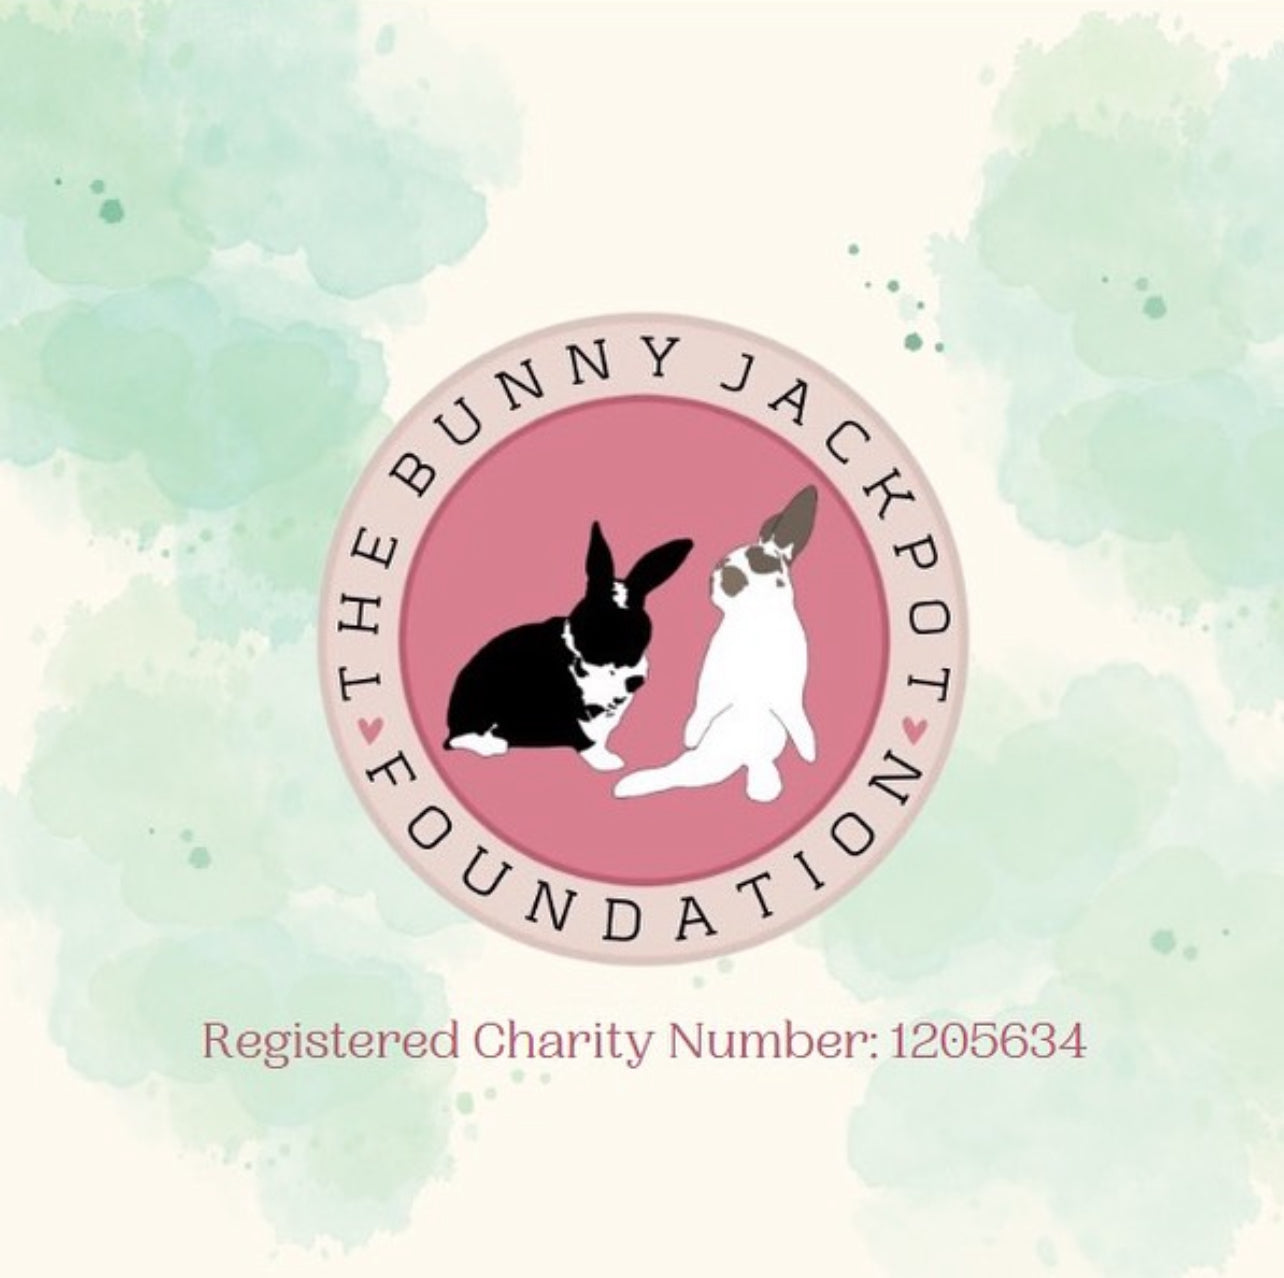 Donation Box for The Bunny Jackpot Foundation